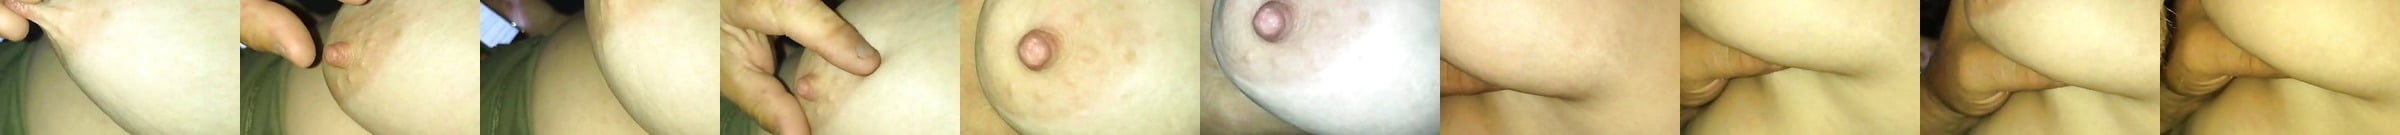 Nipple Sucking Hd Porn Videos New Page 2